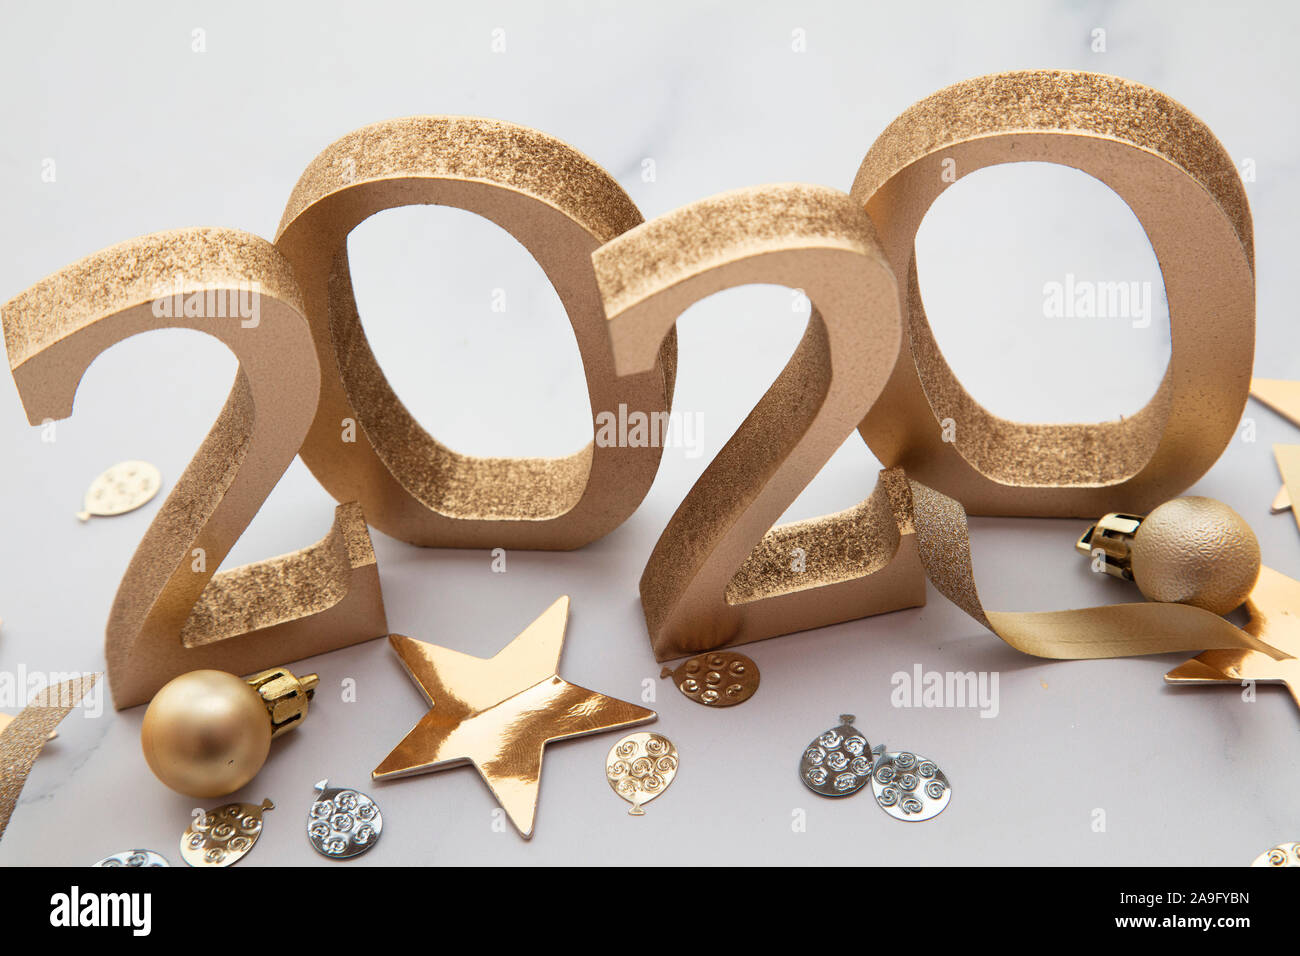 New year 2020 party gold decoration celebration background. Stock Photo